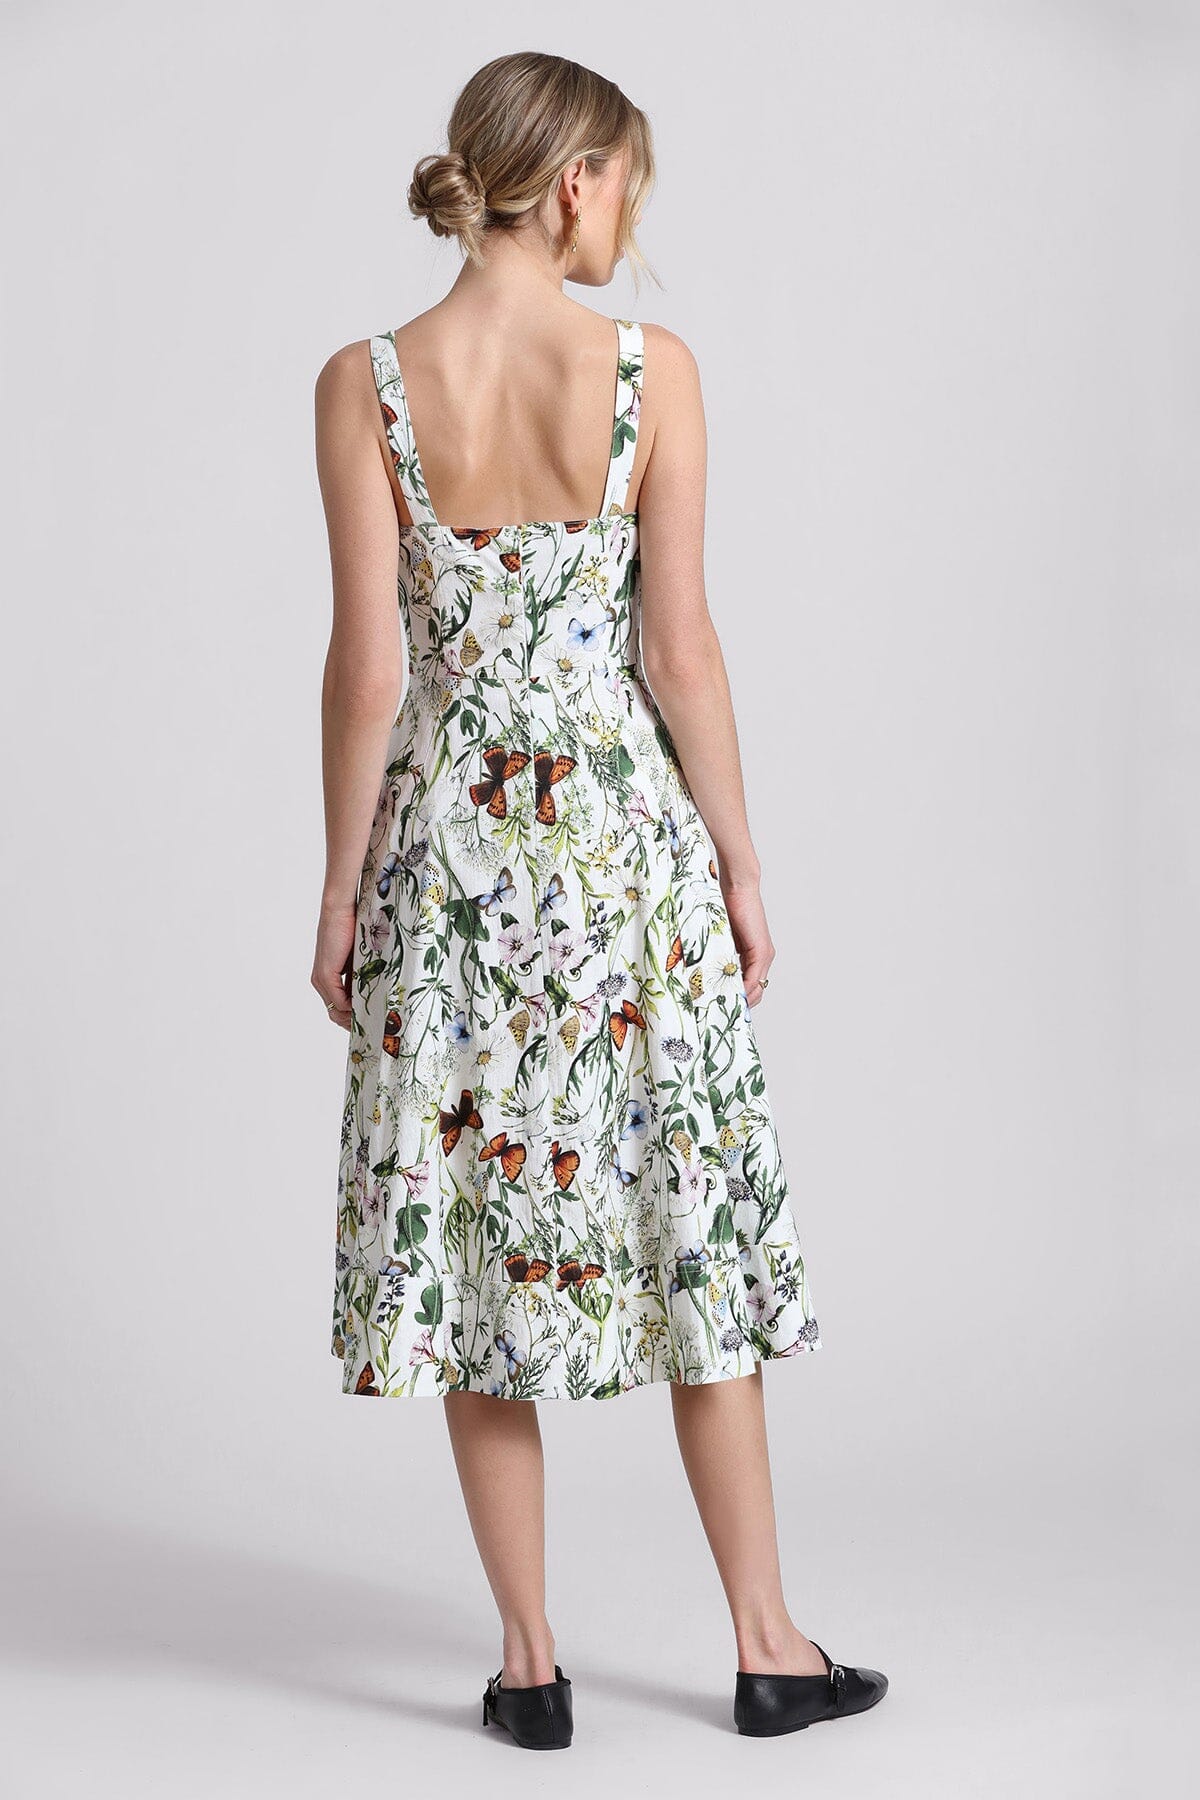 Botanical floral butterfly print cotton fit n flare midi dress - women's figure flattering summer brunch dresses for 2024 trends by Avec Les Filles